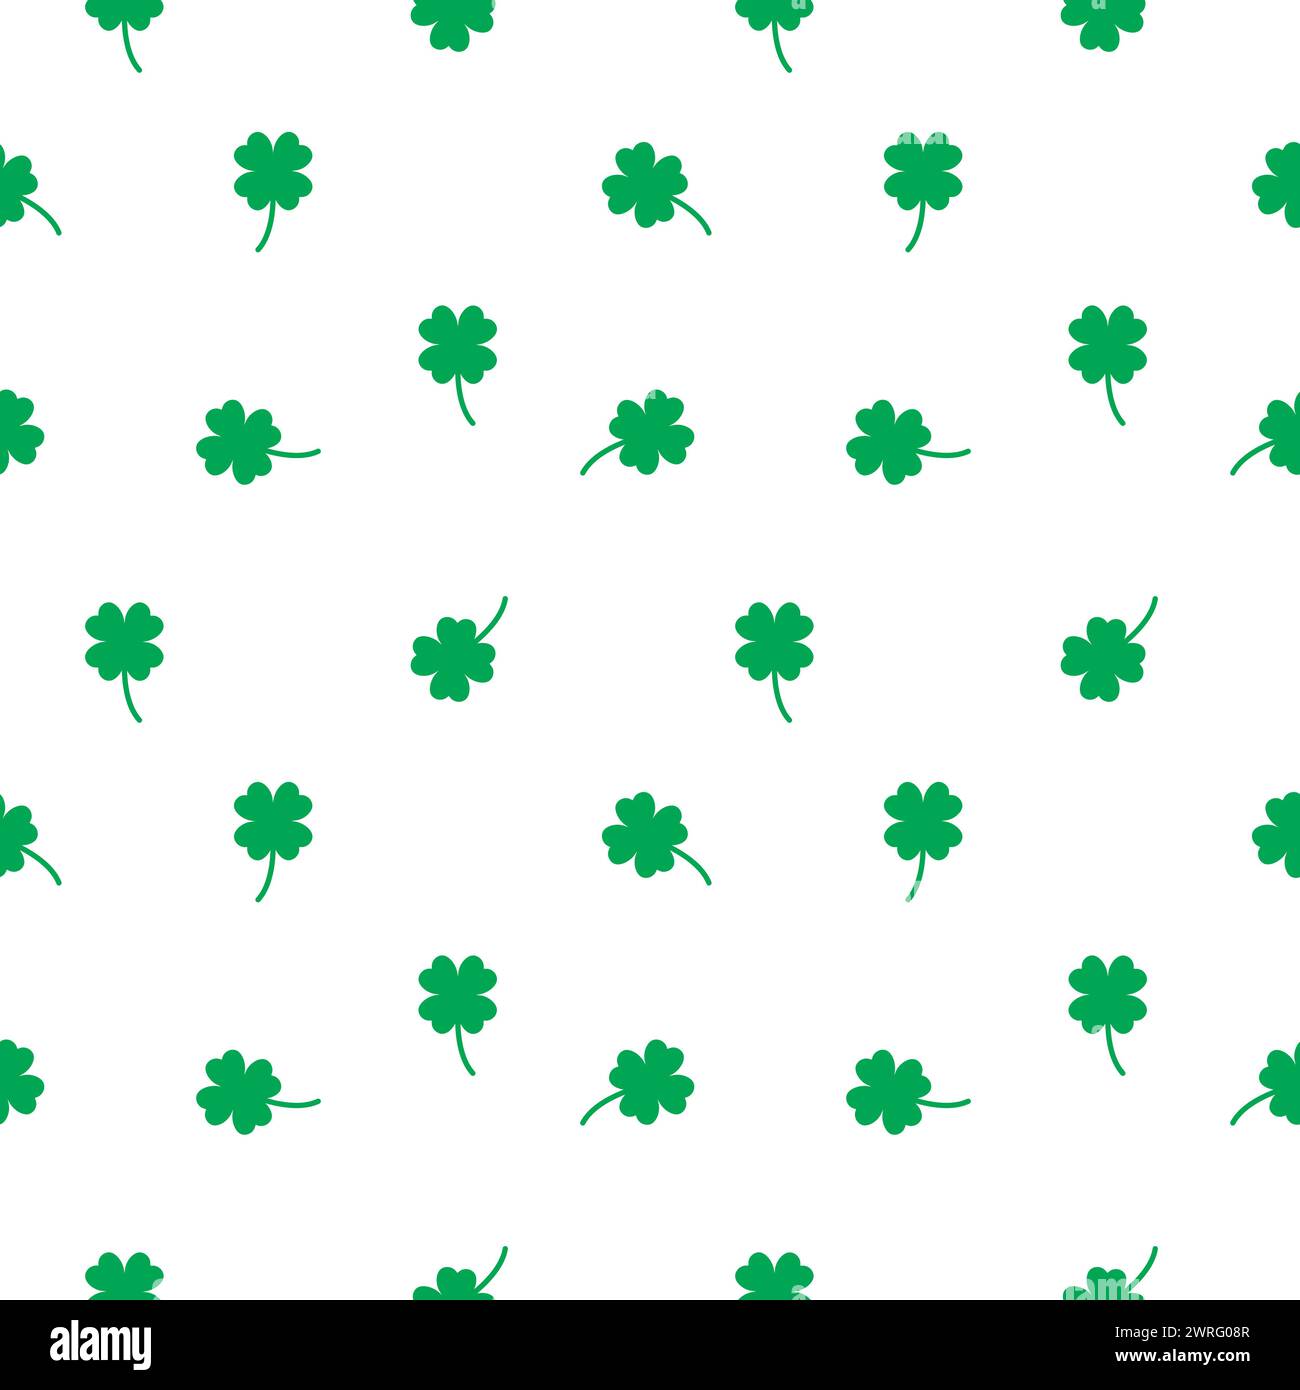 Glückssymbol, vierblättriges grünes Kleeblatt nahtloses Muster, Hintergrund, bringt Glück, dein Glückssymbol, Tag des Glücks, Taschensymbol mit Glücksspielmarke Stock Vektor